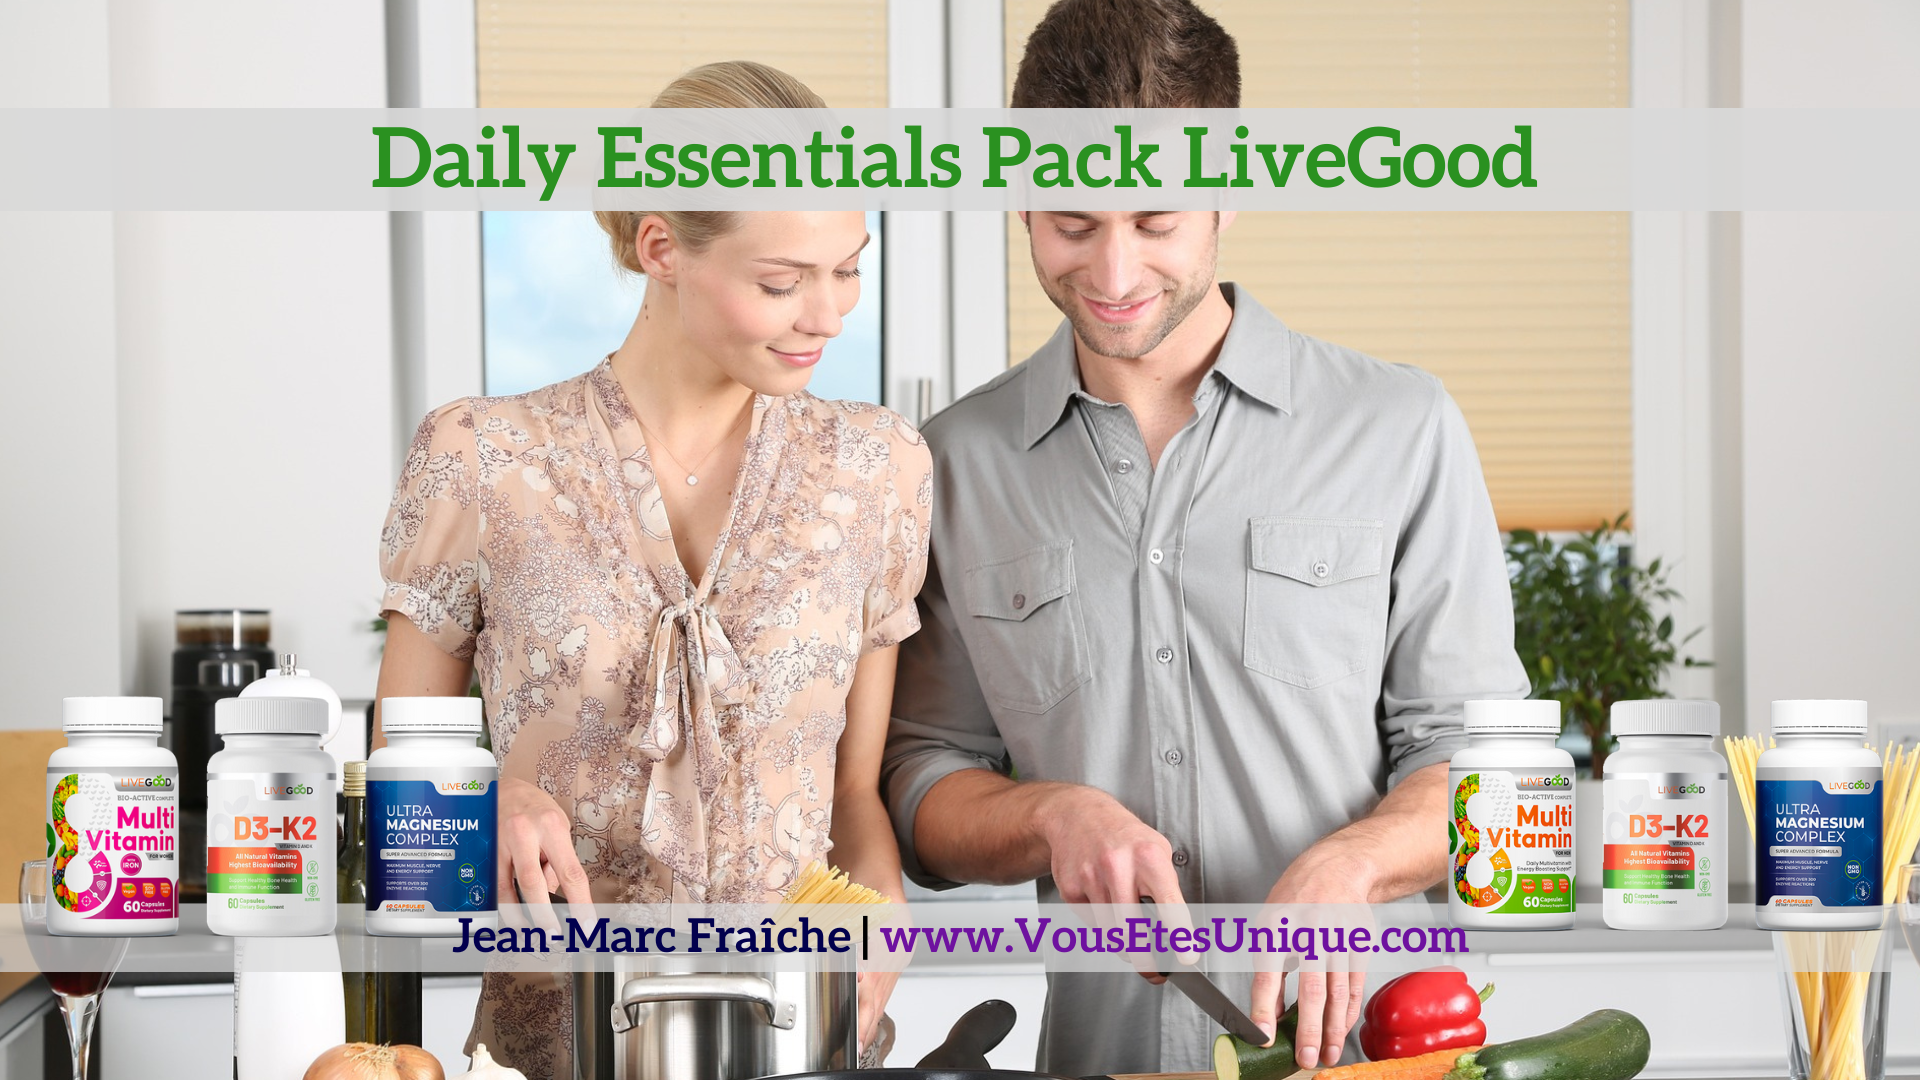 Daily Essentials Pack LiveGood Daily-Essentials-Pack-LiveGood-Jean-Marc-Fraiche-VousEtesUnique.com